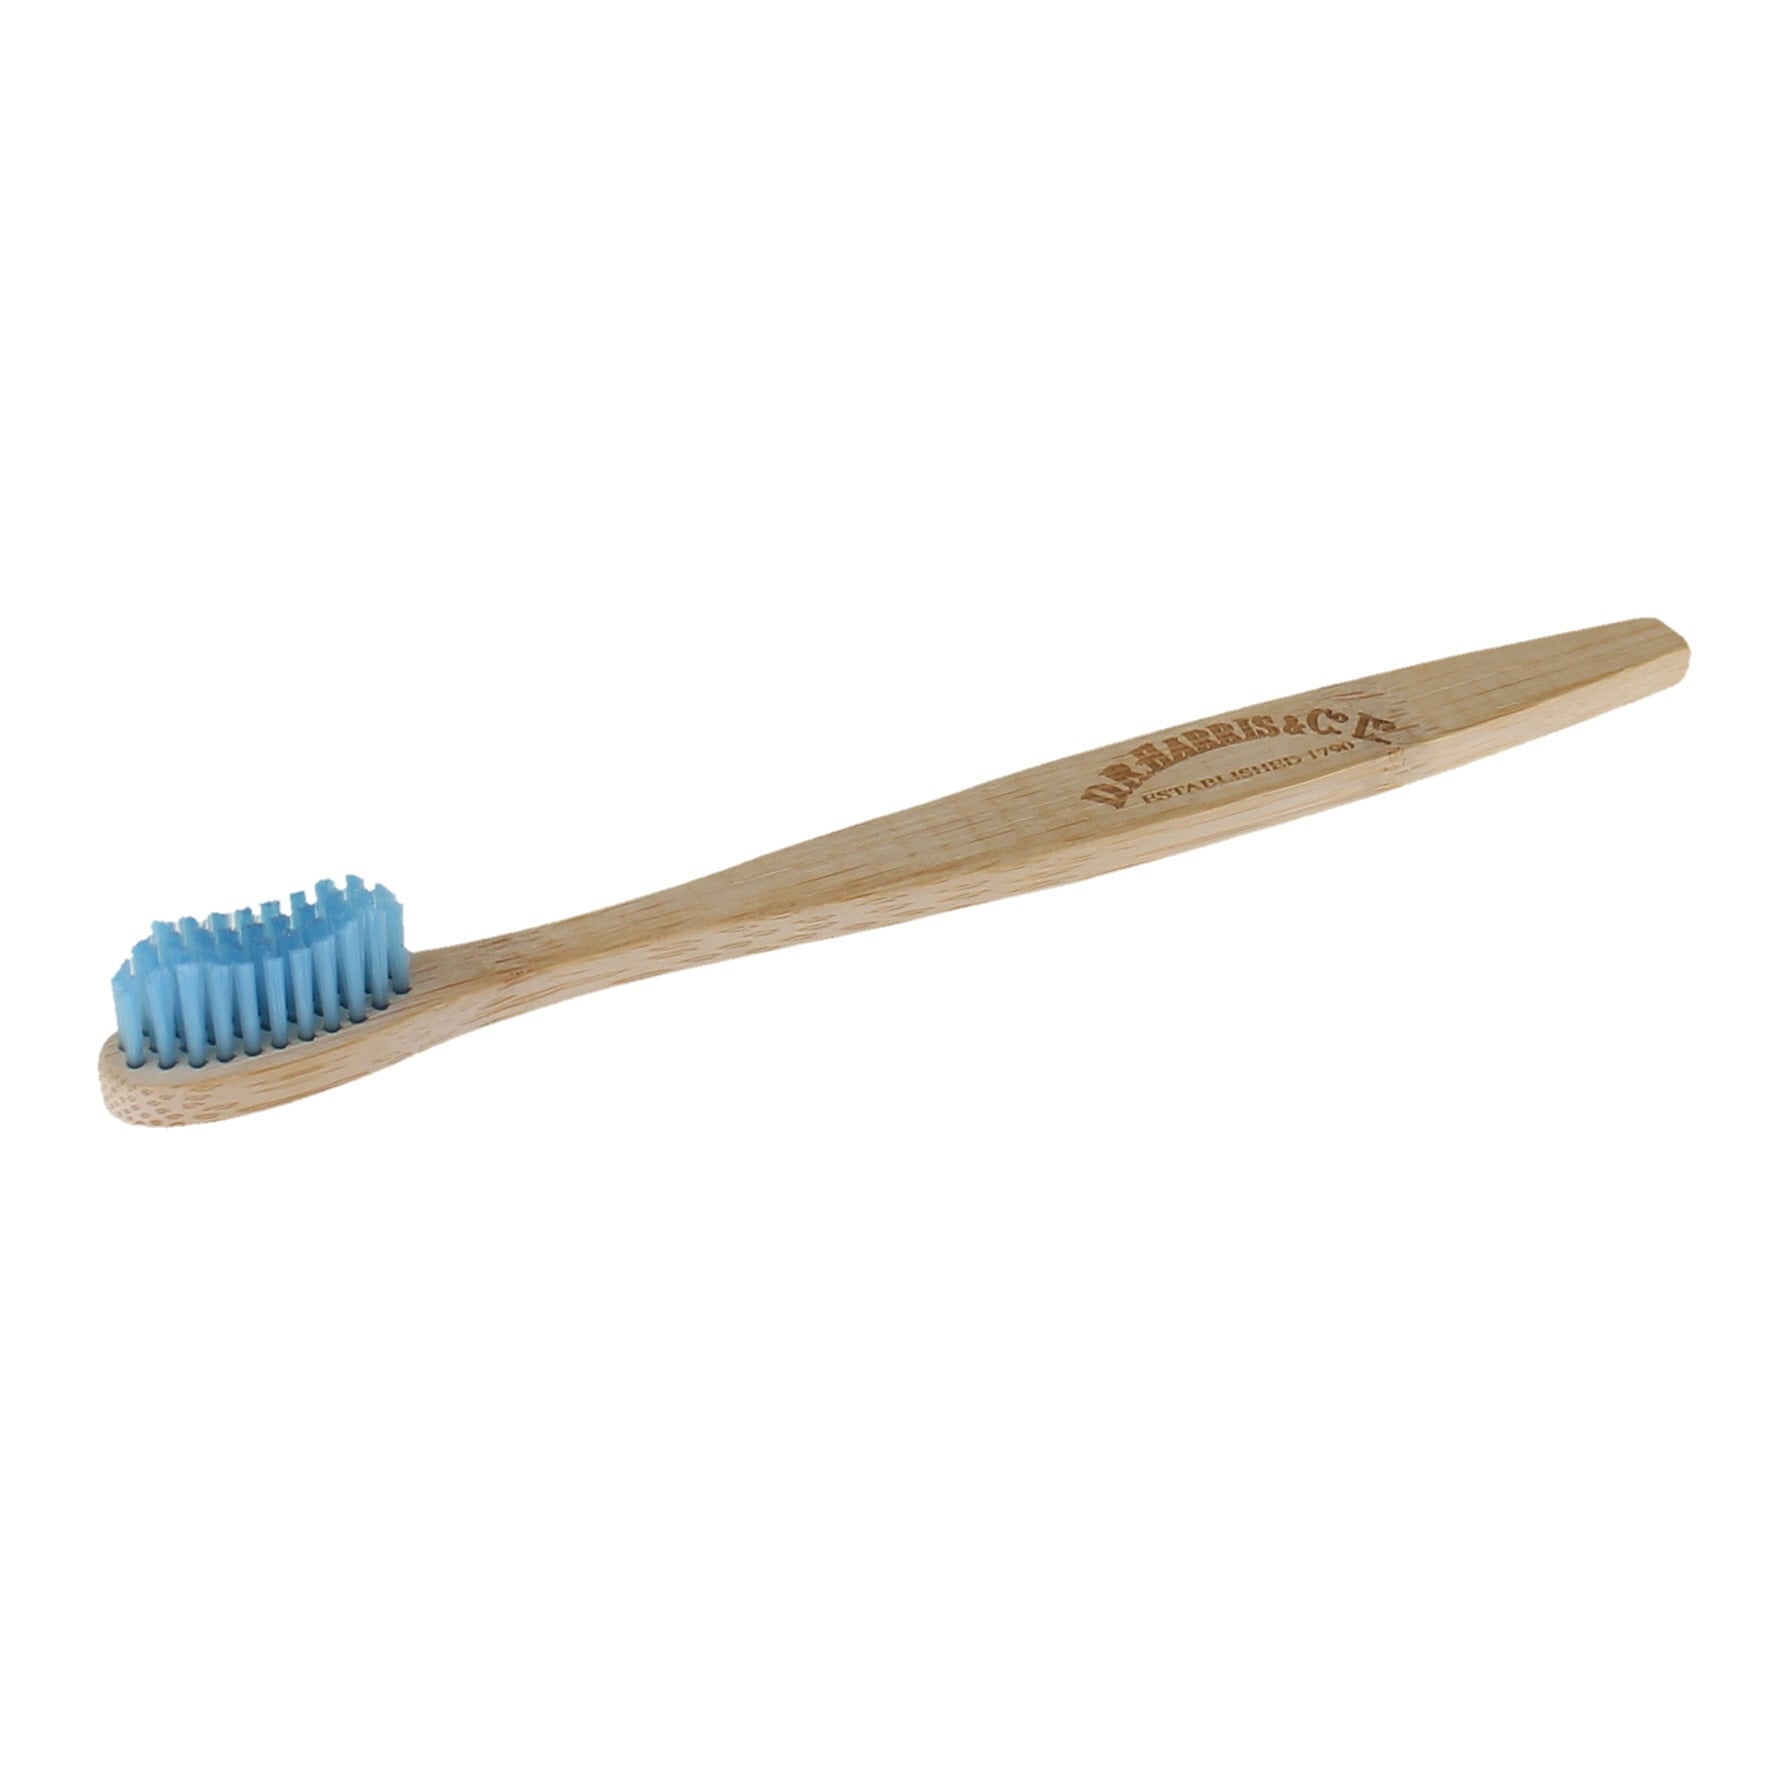 D.R. Harris Blue Bristle Biodegradable Bamboo Toothbrush